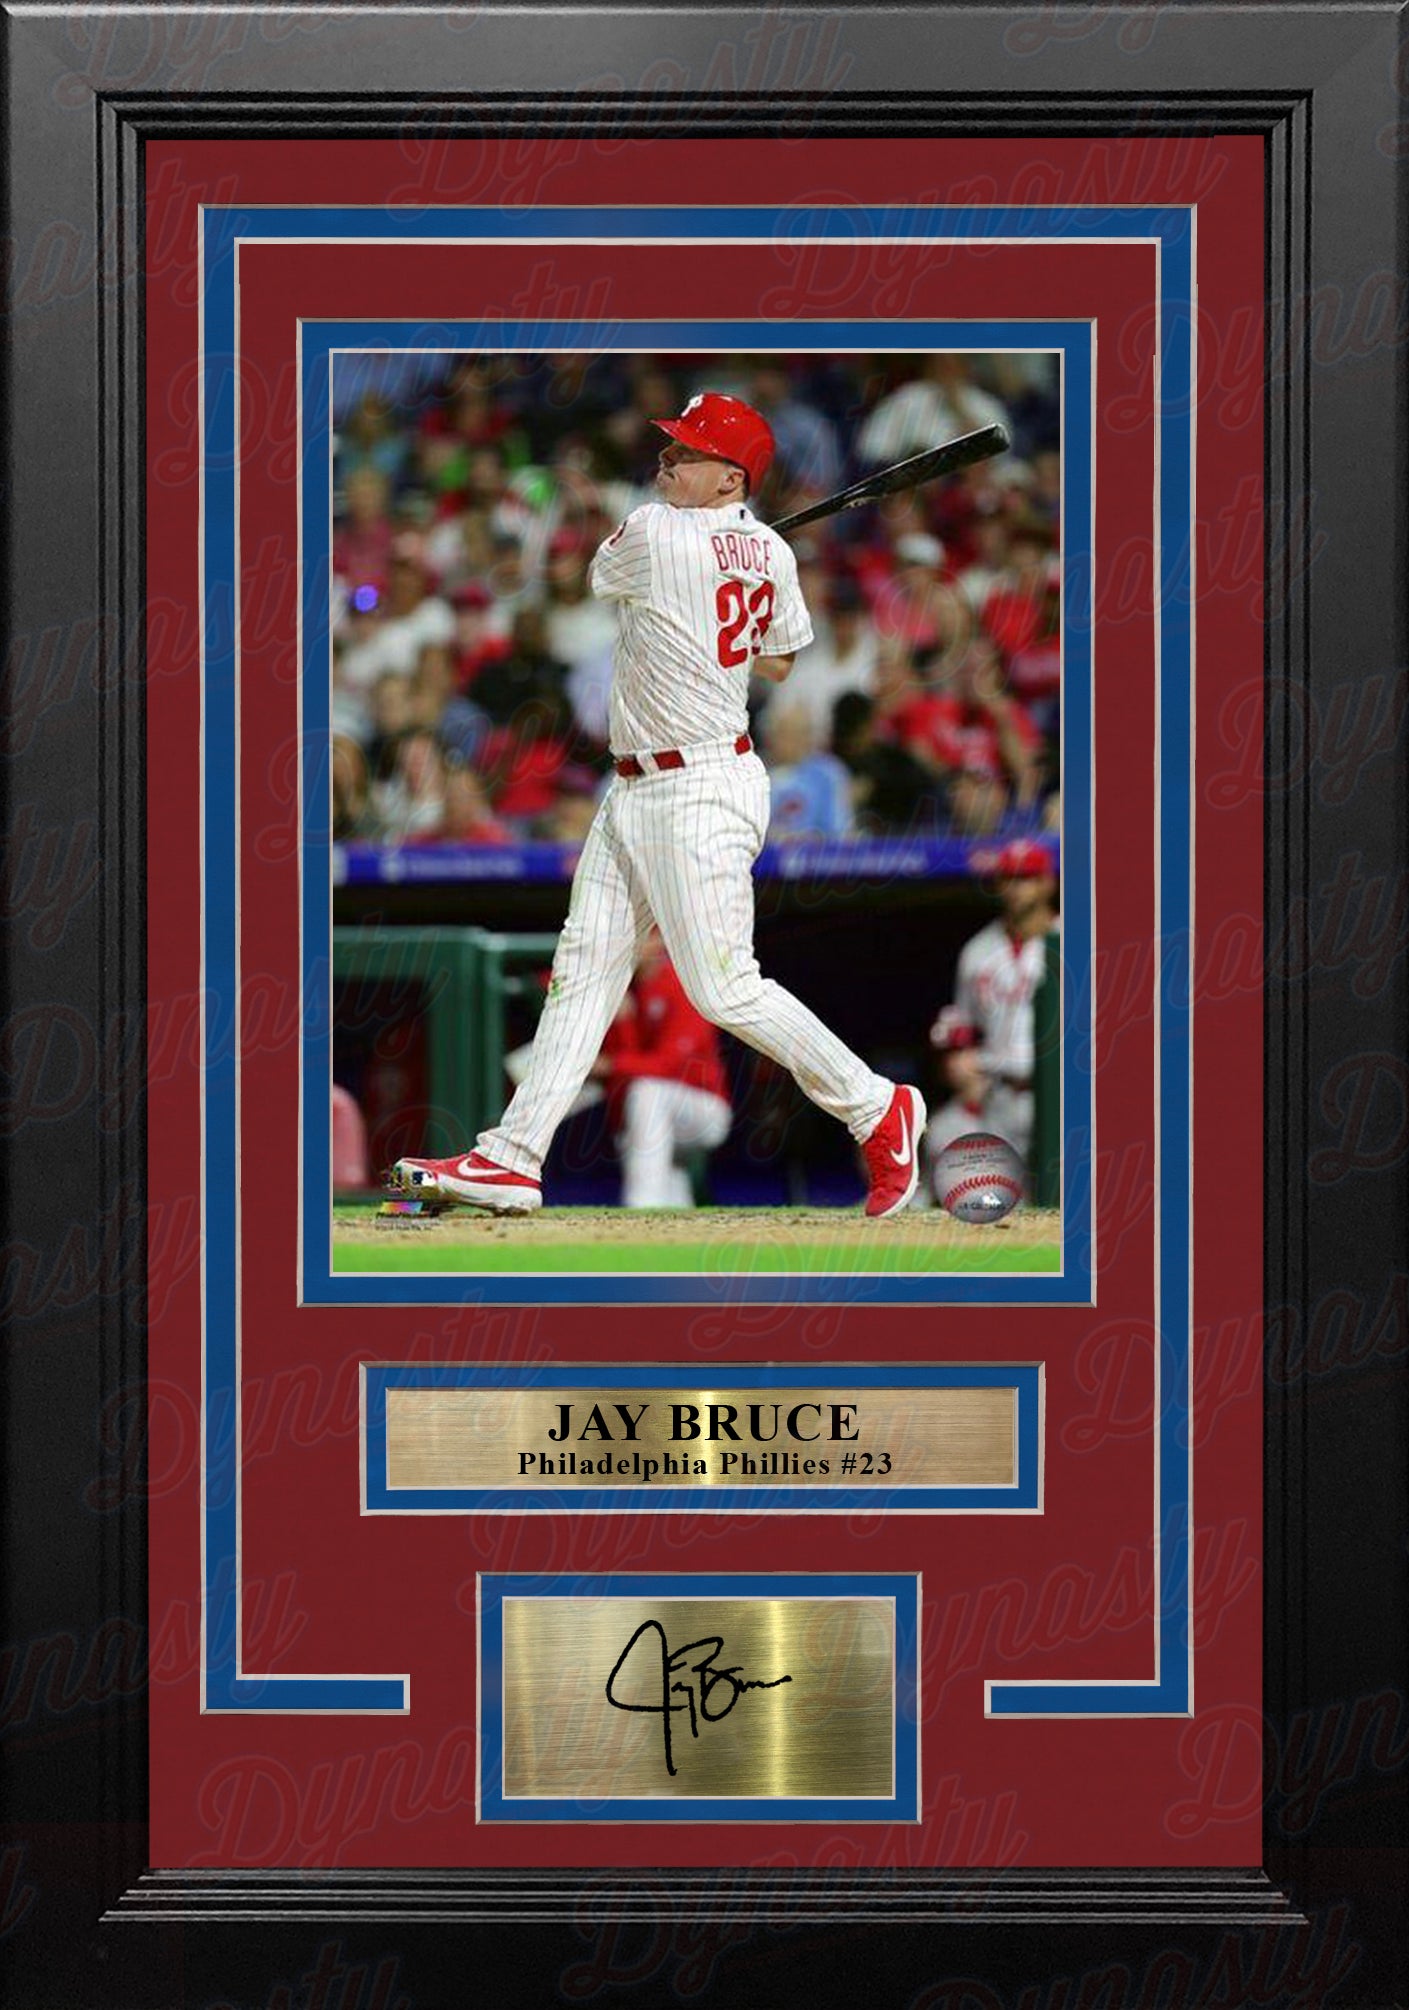 Jay Bruce Philadelphia Phillies MLB Baseball 8" x 10" Framed Photo with Engraved Autograph - Dynasty Sports & Framing 